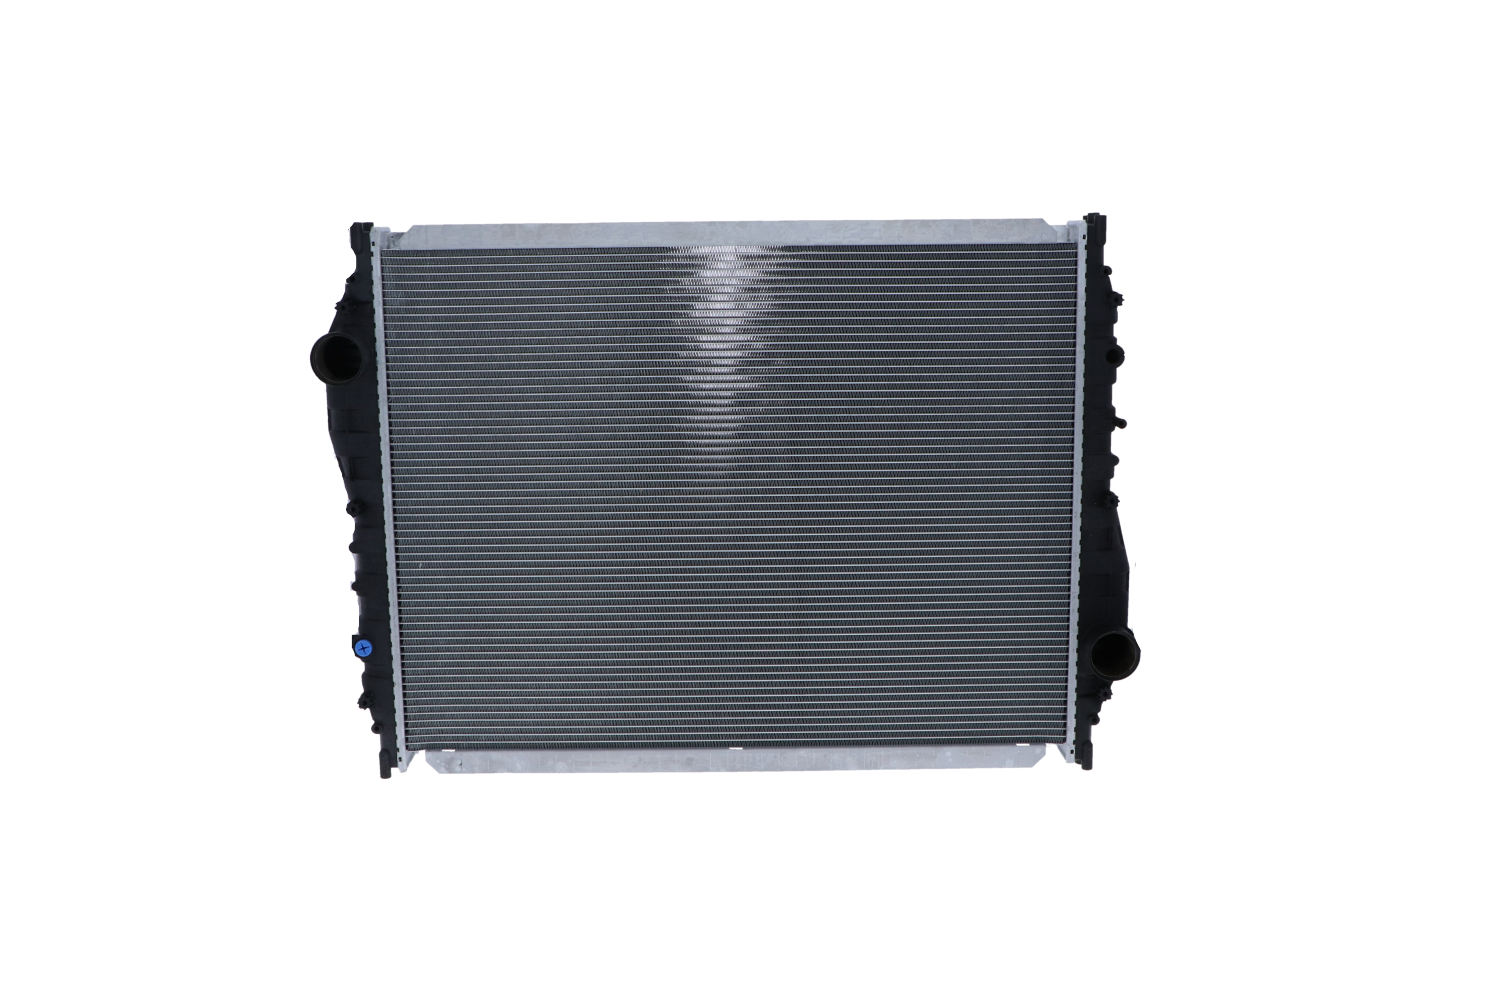 NRF 509887 Engine radiator Aluminium, 850 x 638 x 56 mm, without frame, Brazed cooling fins